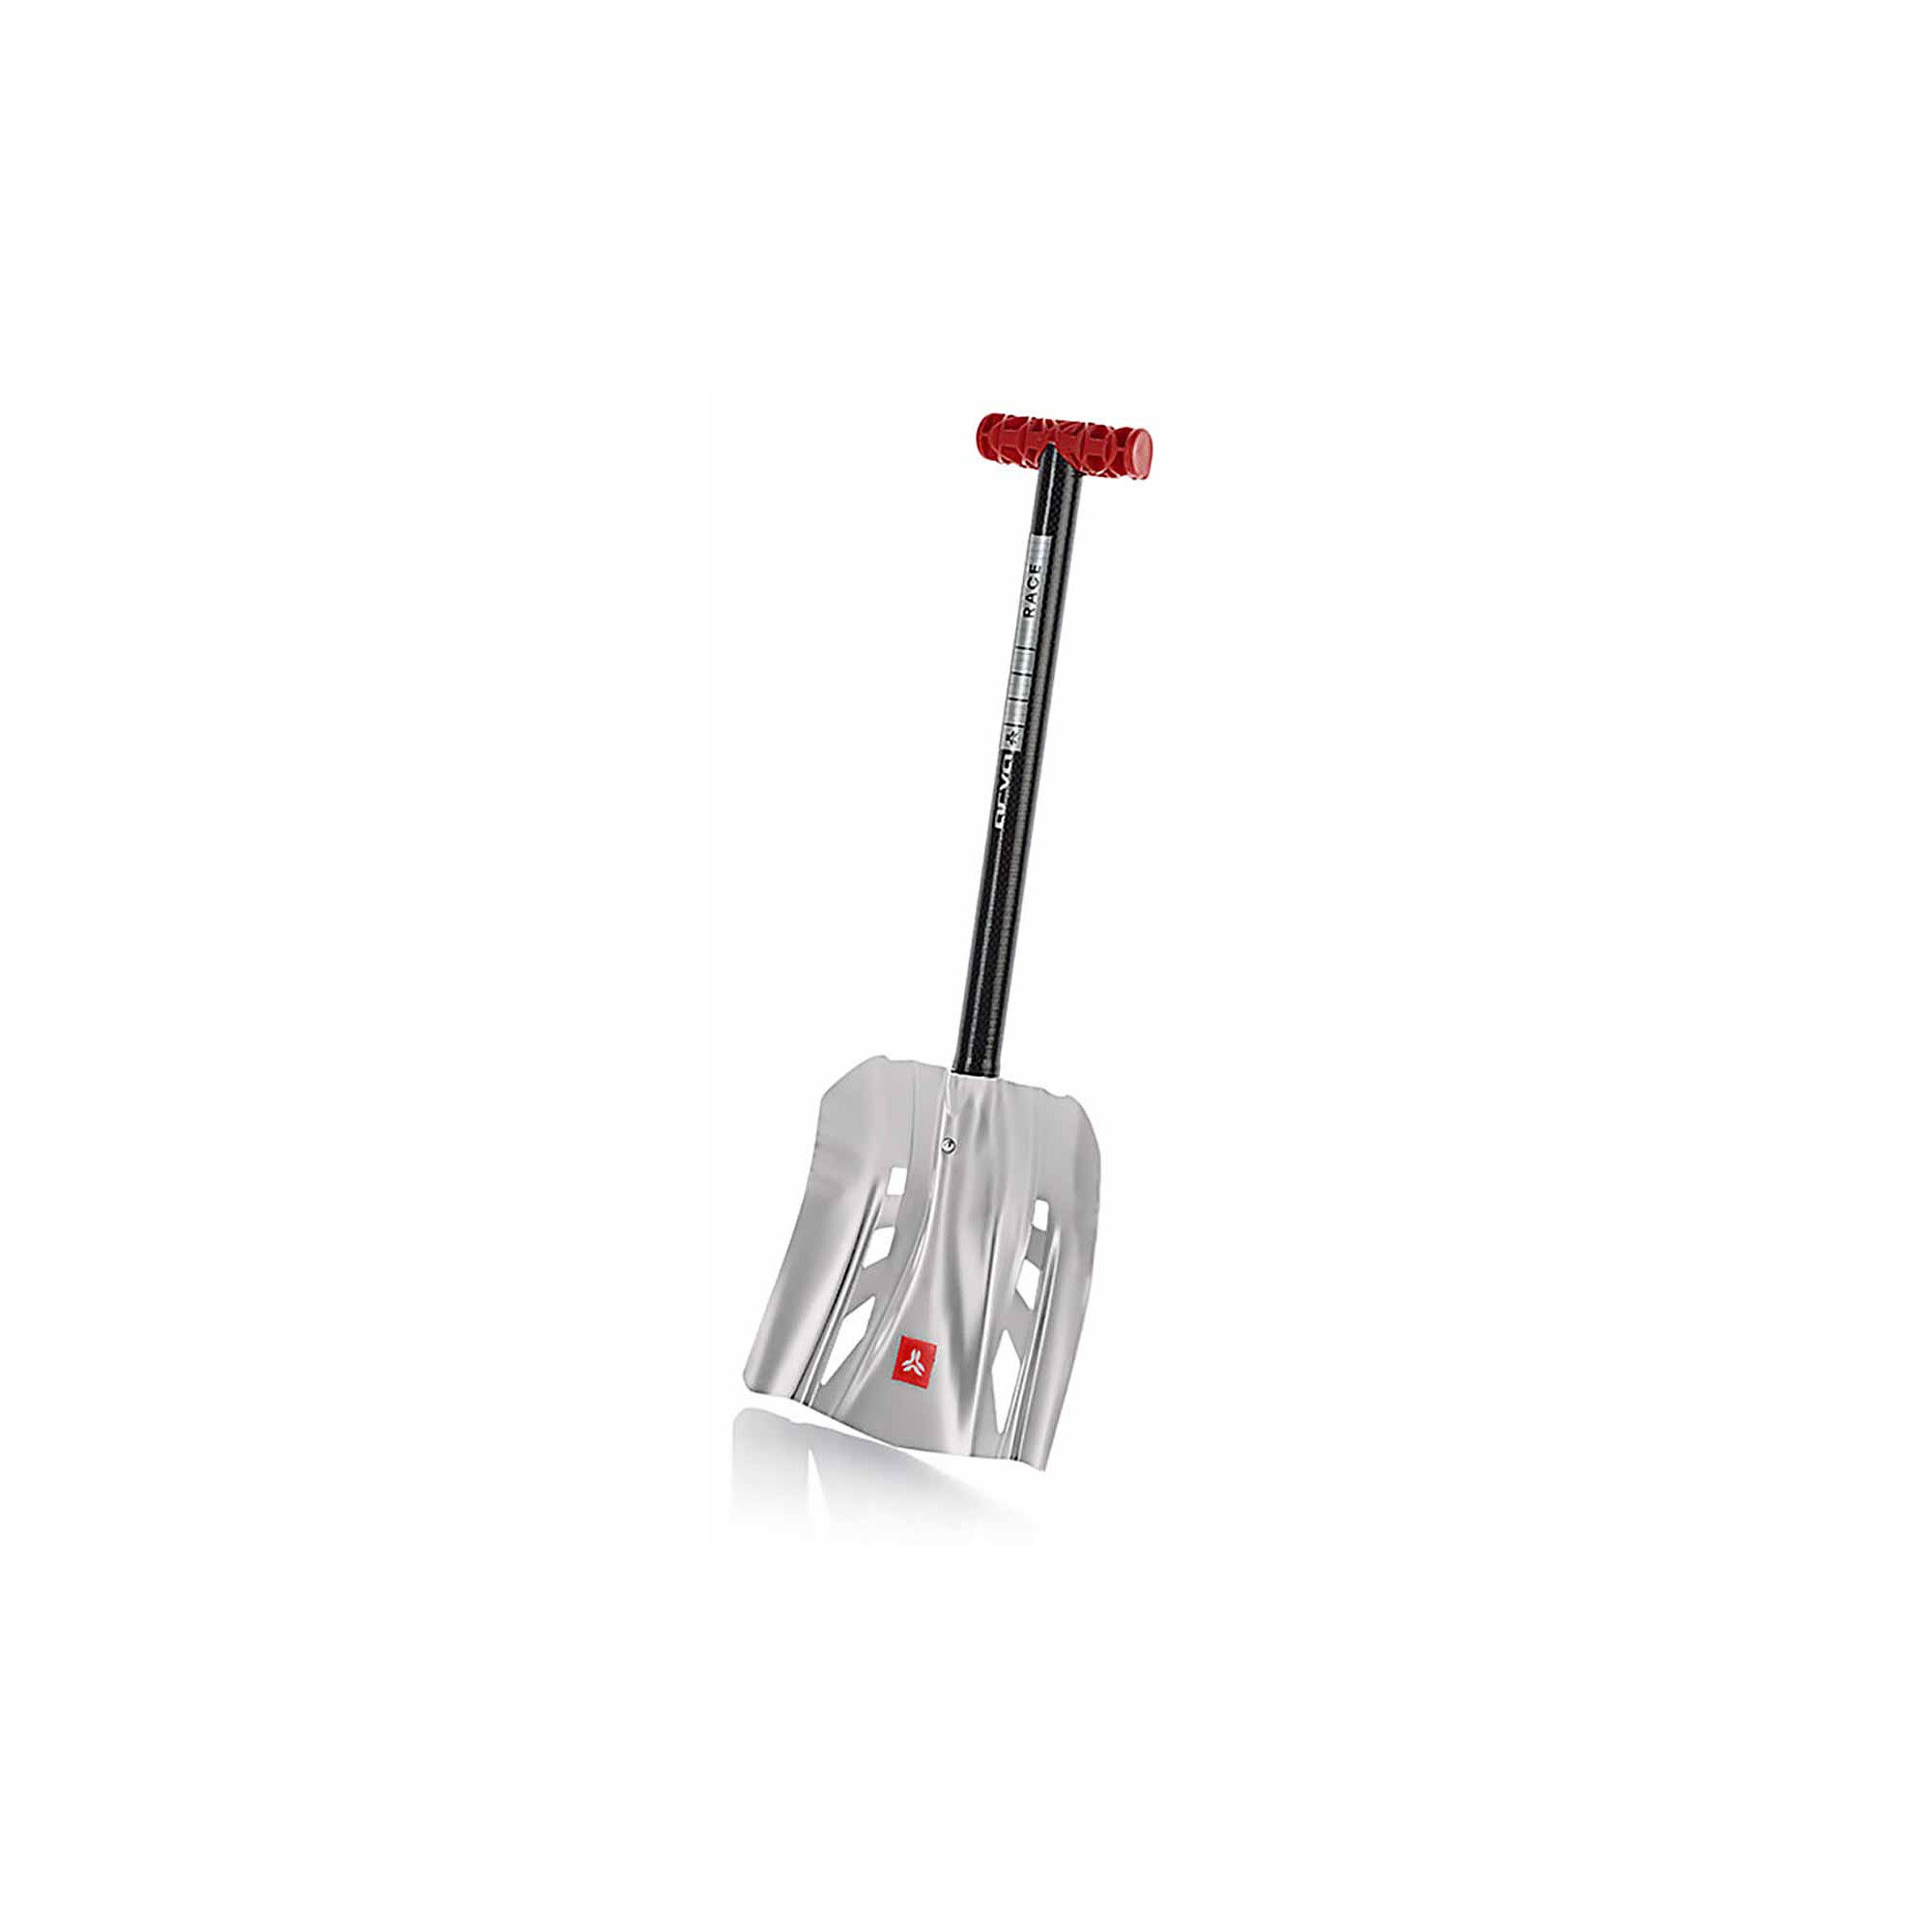 ARVA Race snow shovel